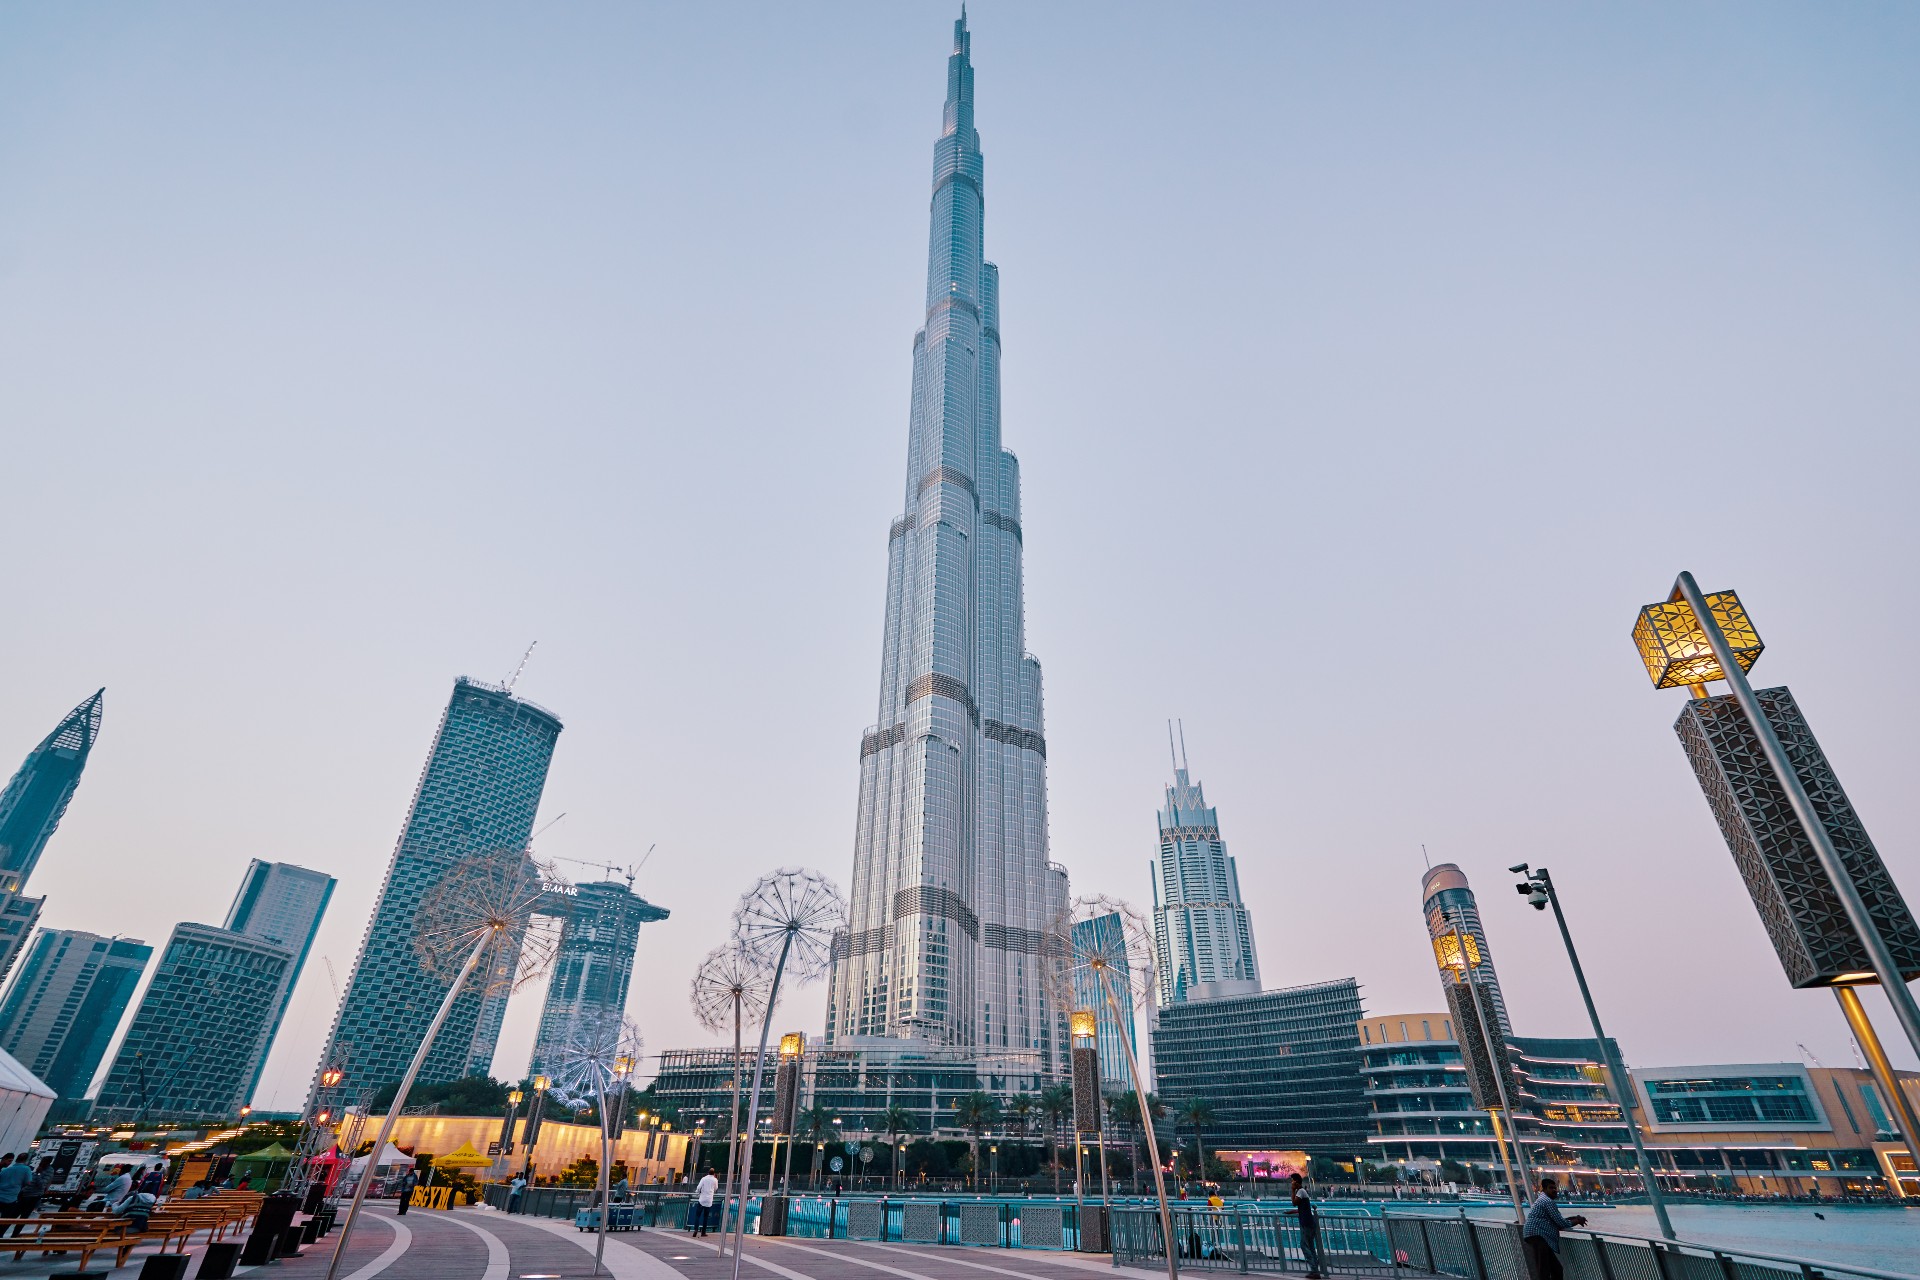 A photo of the Burj Khalifa Skyscraper